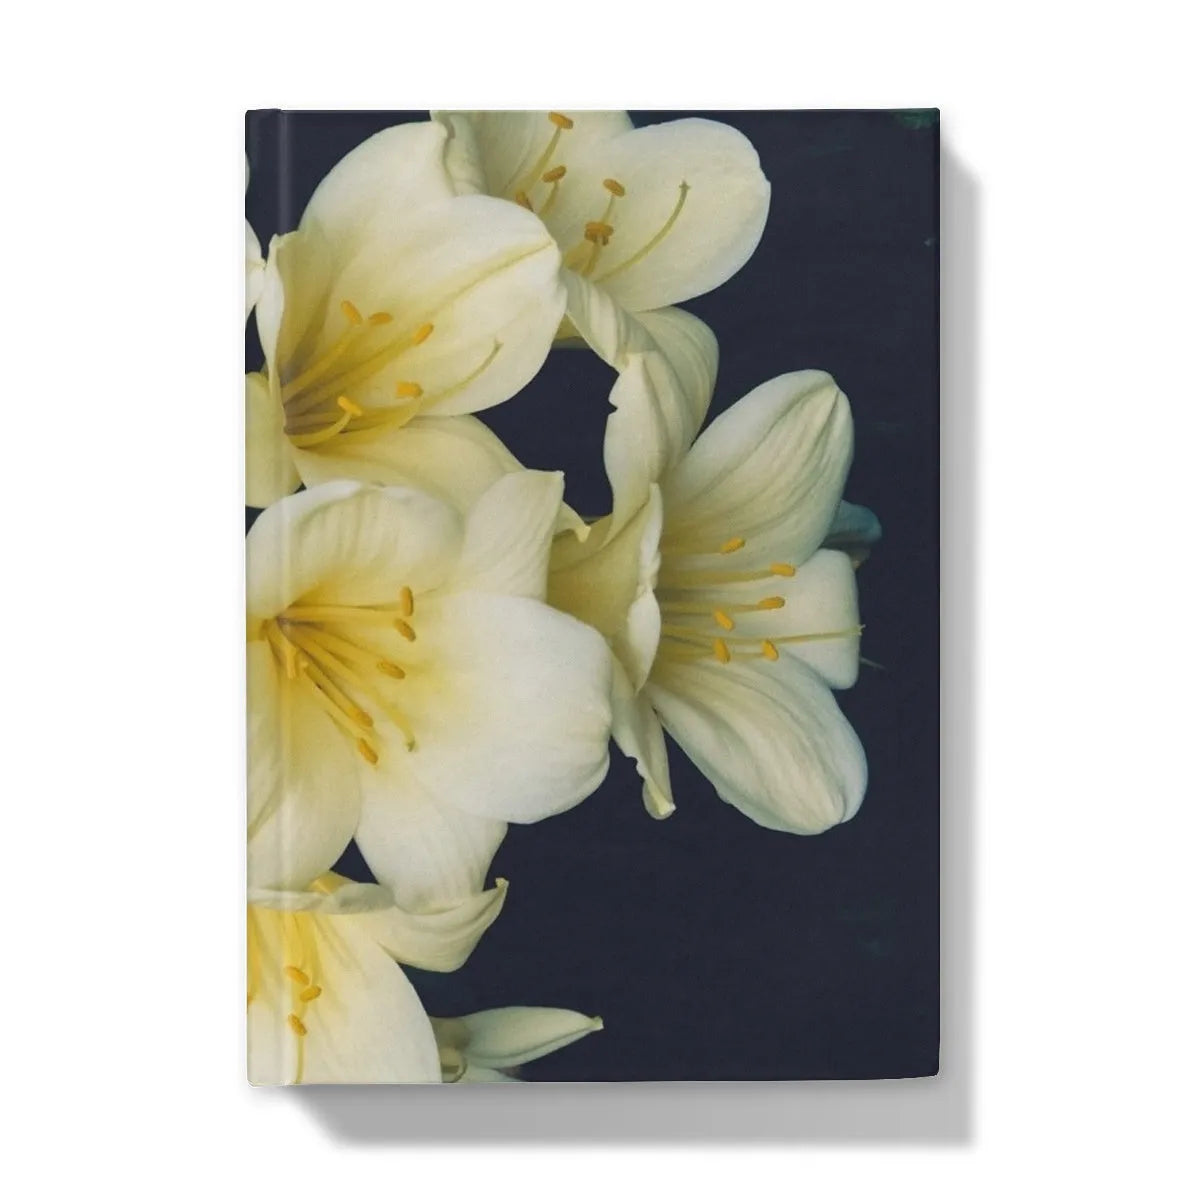 Flower Power Too Hardback Journal - 5’x7’ / 5’ x 7’ - Lined Paper - Notebooks & Notepads - Aesthetic Art